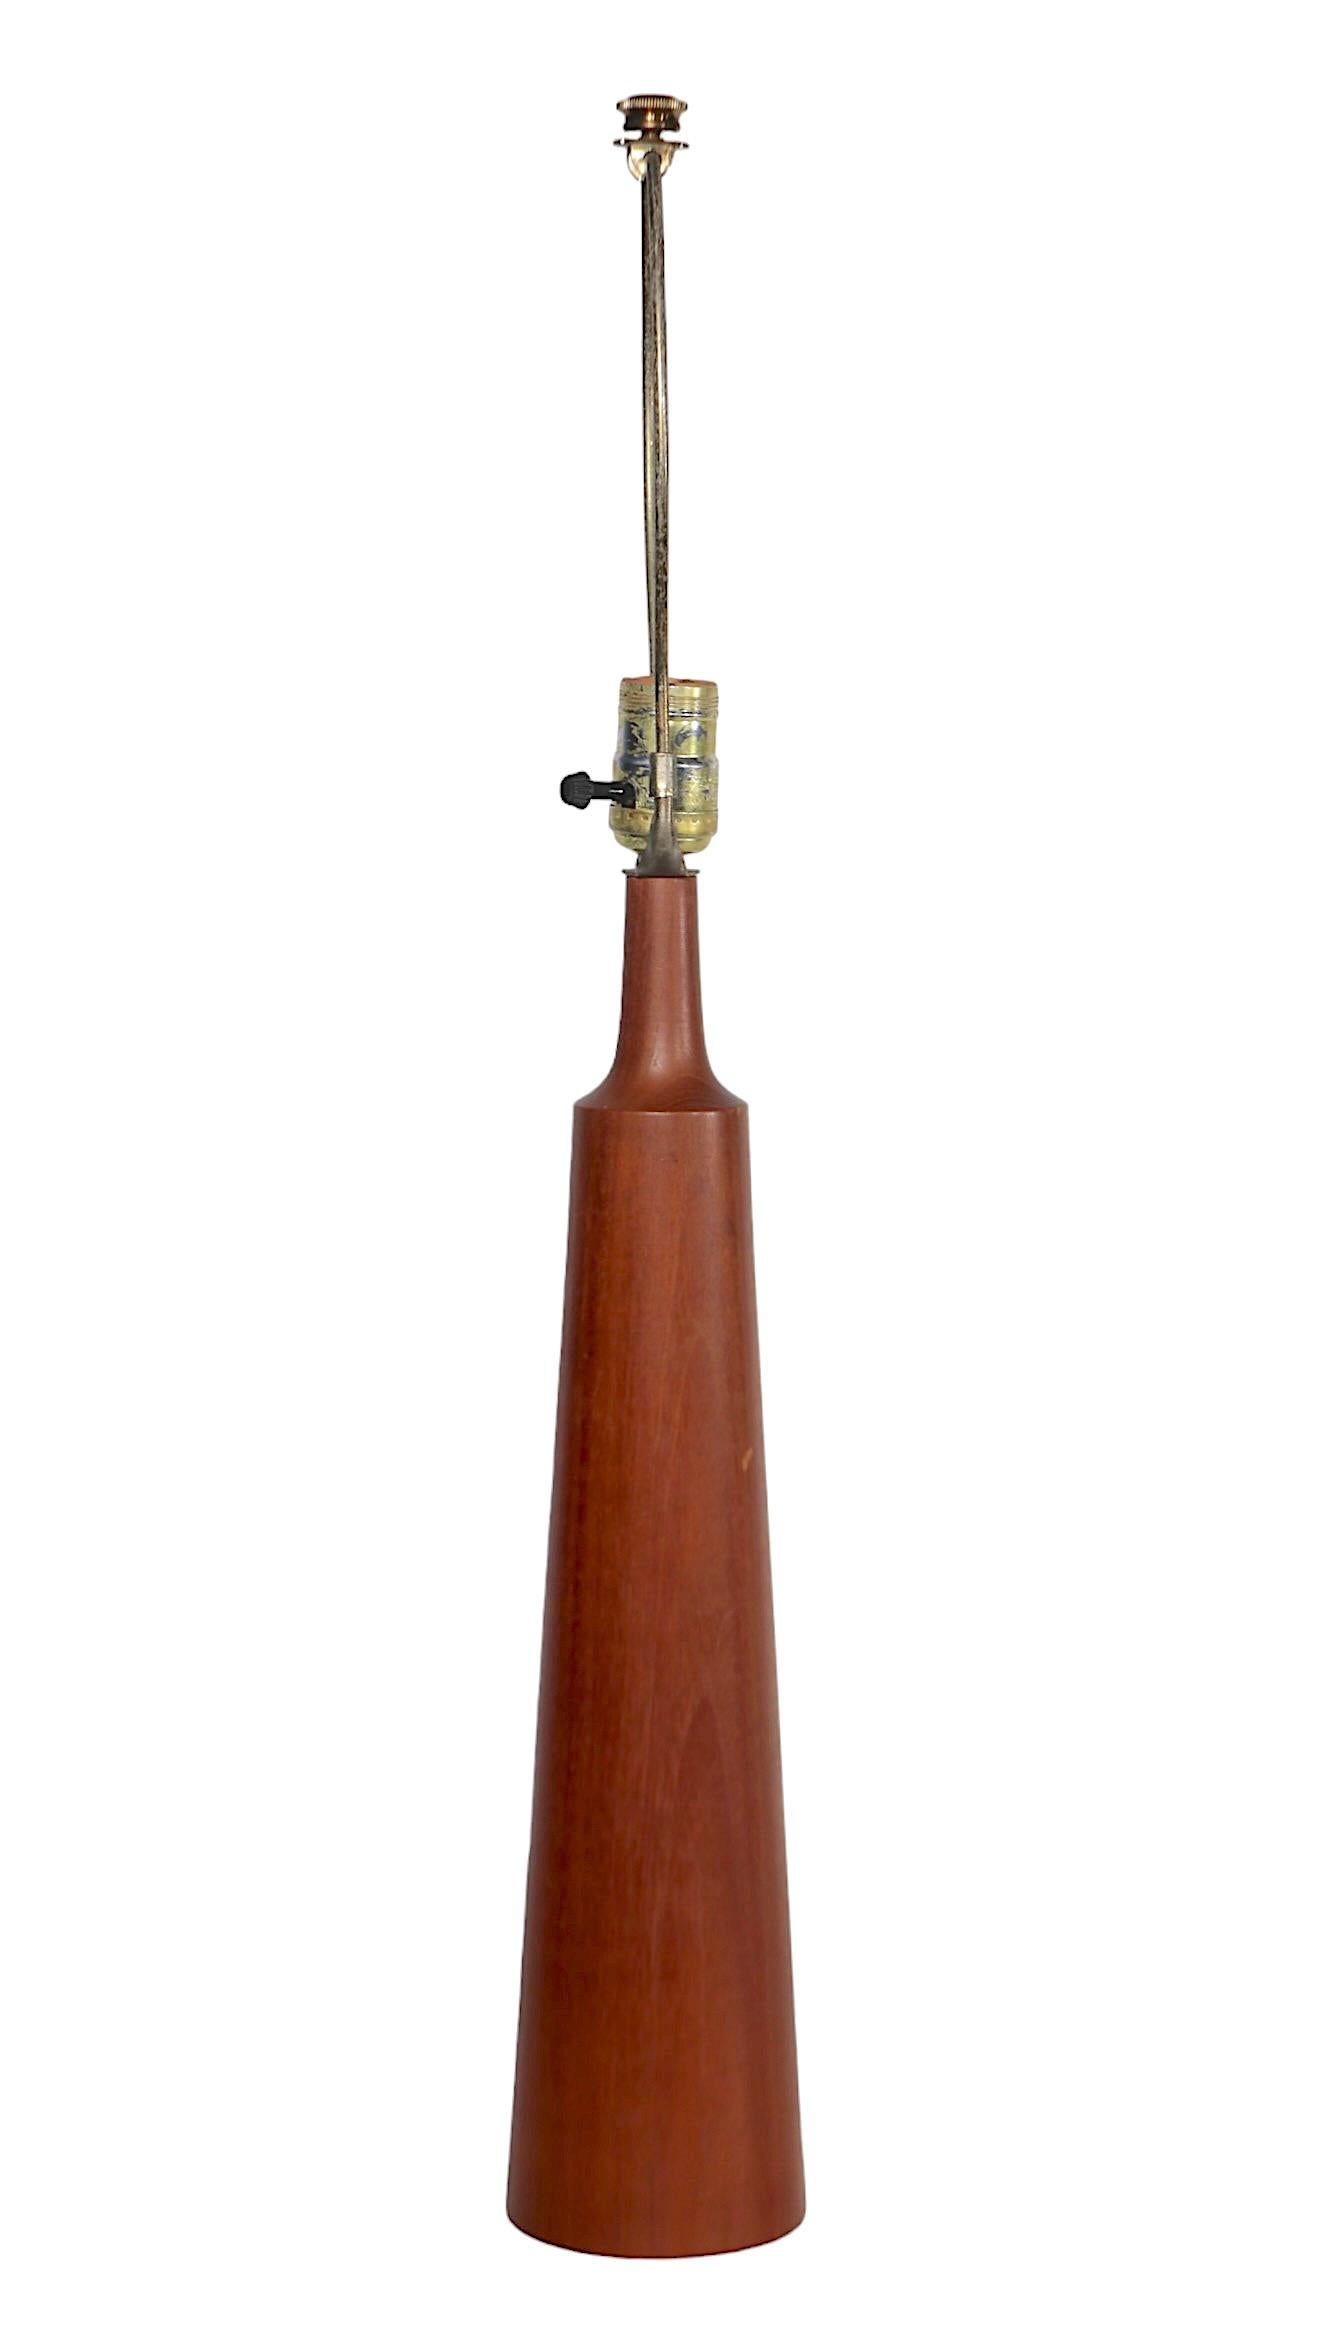 Danish Mid Century Teak Table Lamp c 1950/60’s For Sale 3